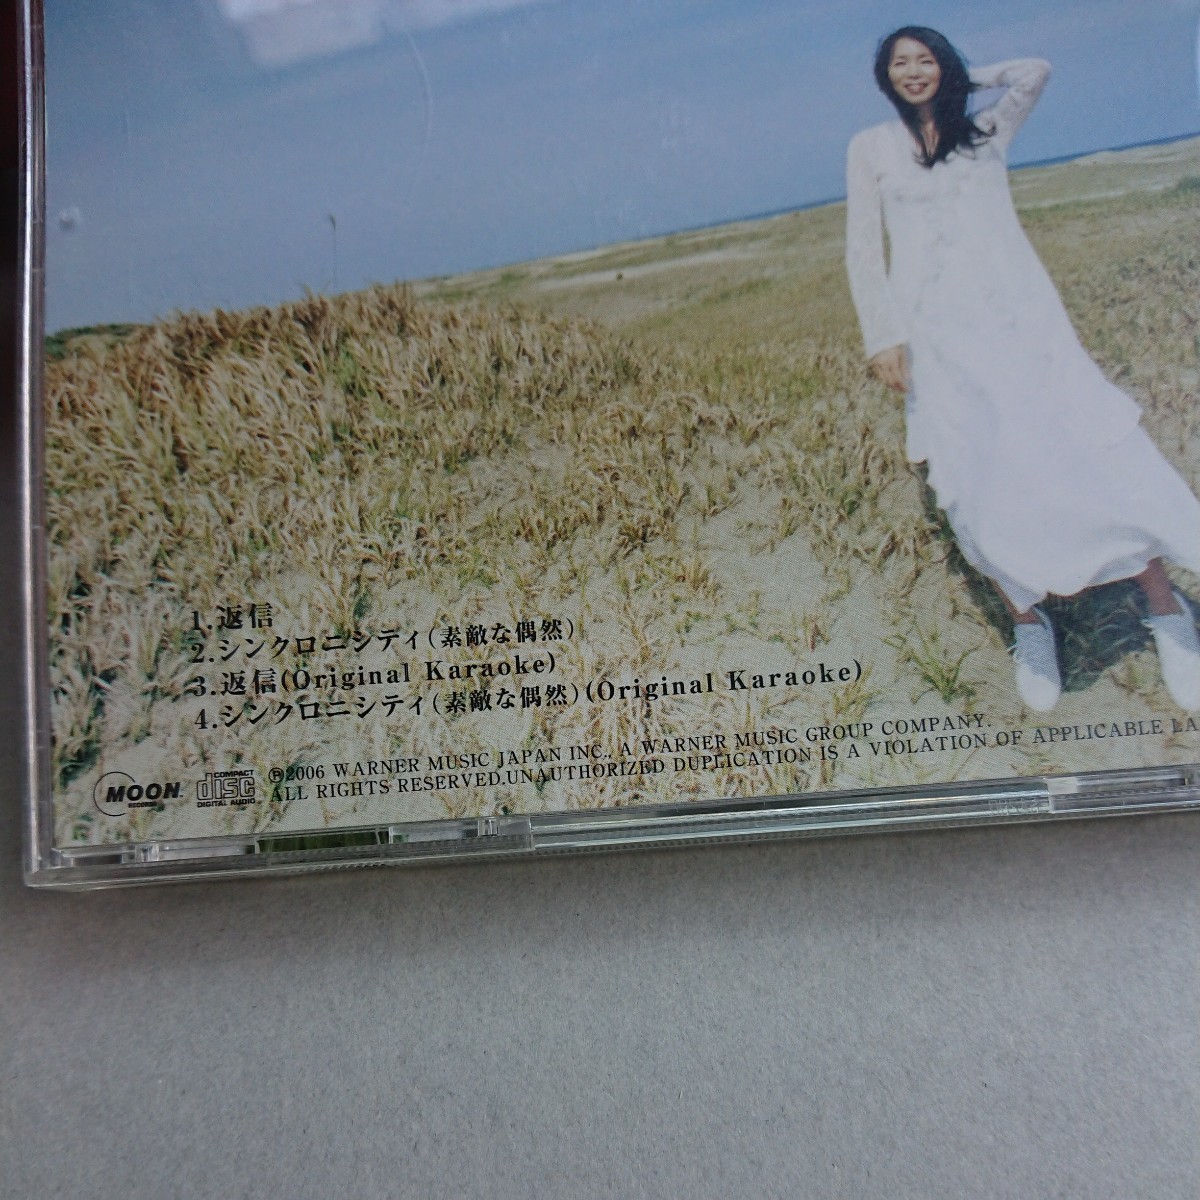 [ Takeuchi Mariya ответ / synchronizer ni City ( замечательный ..)] б/у одиночный CD Mariya Takeuchi Reply Synchronicity